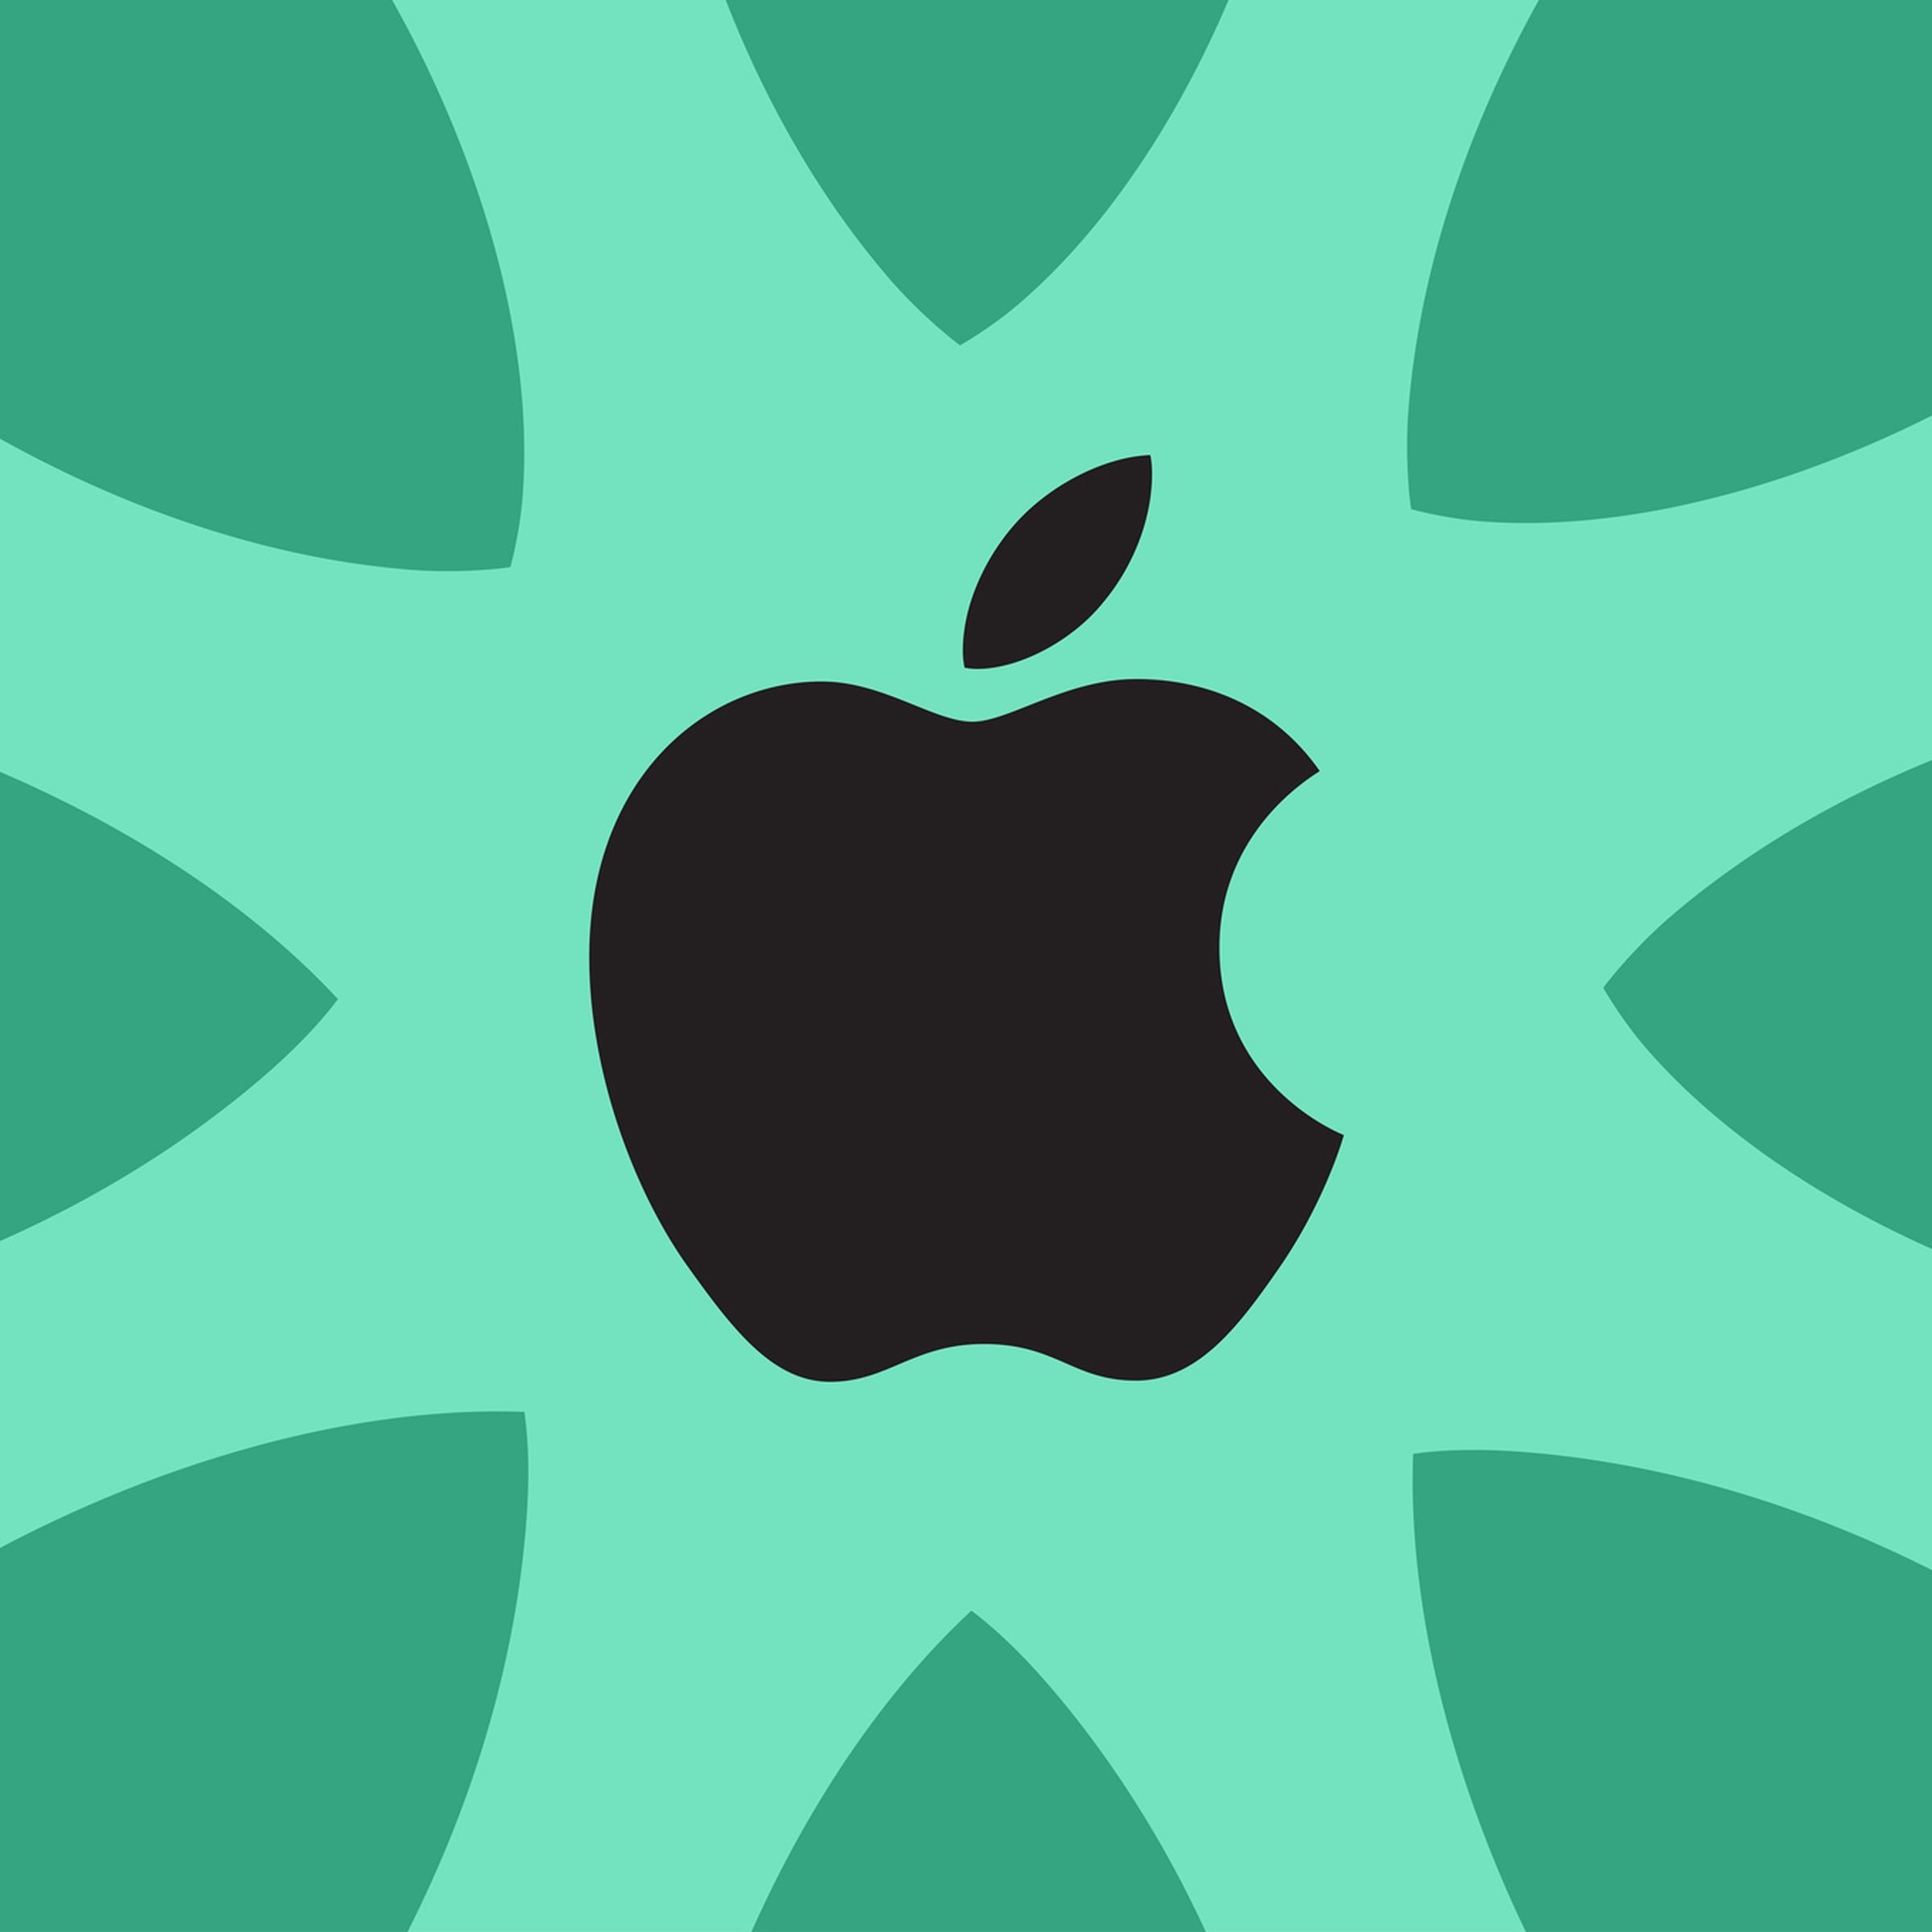 Green backdrop, black apple logo, apple leaves surrounding